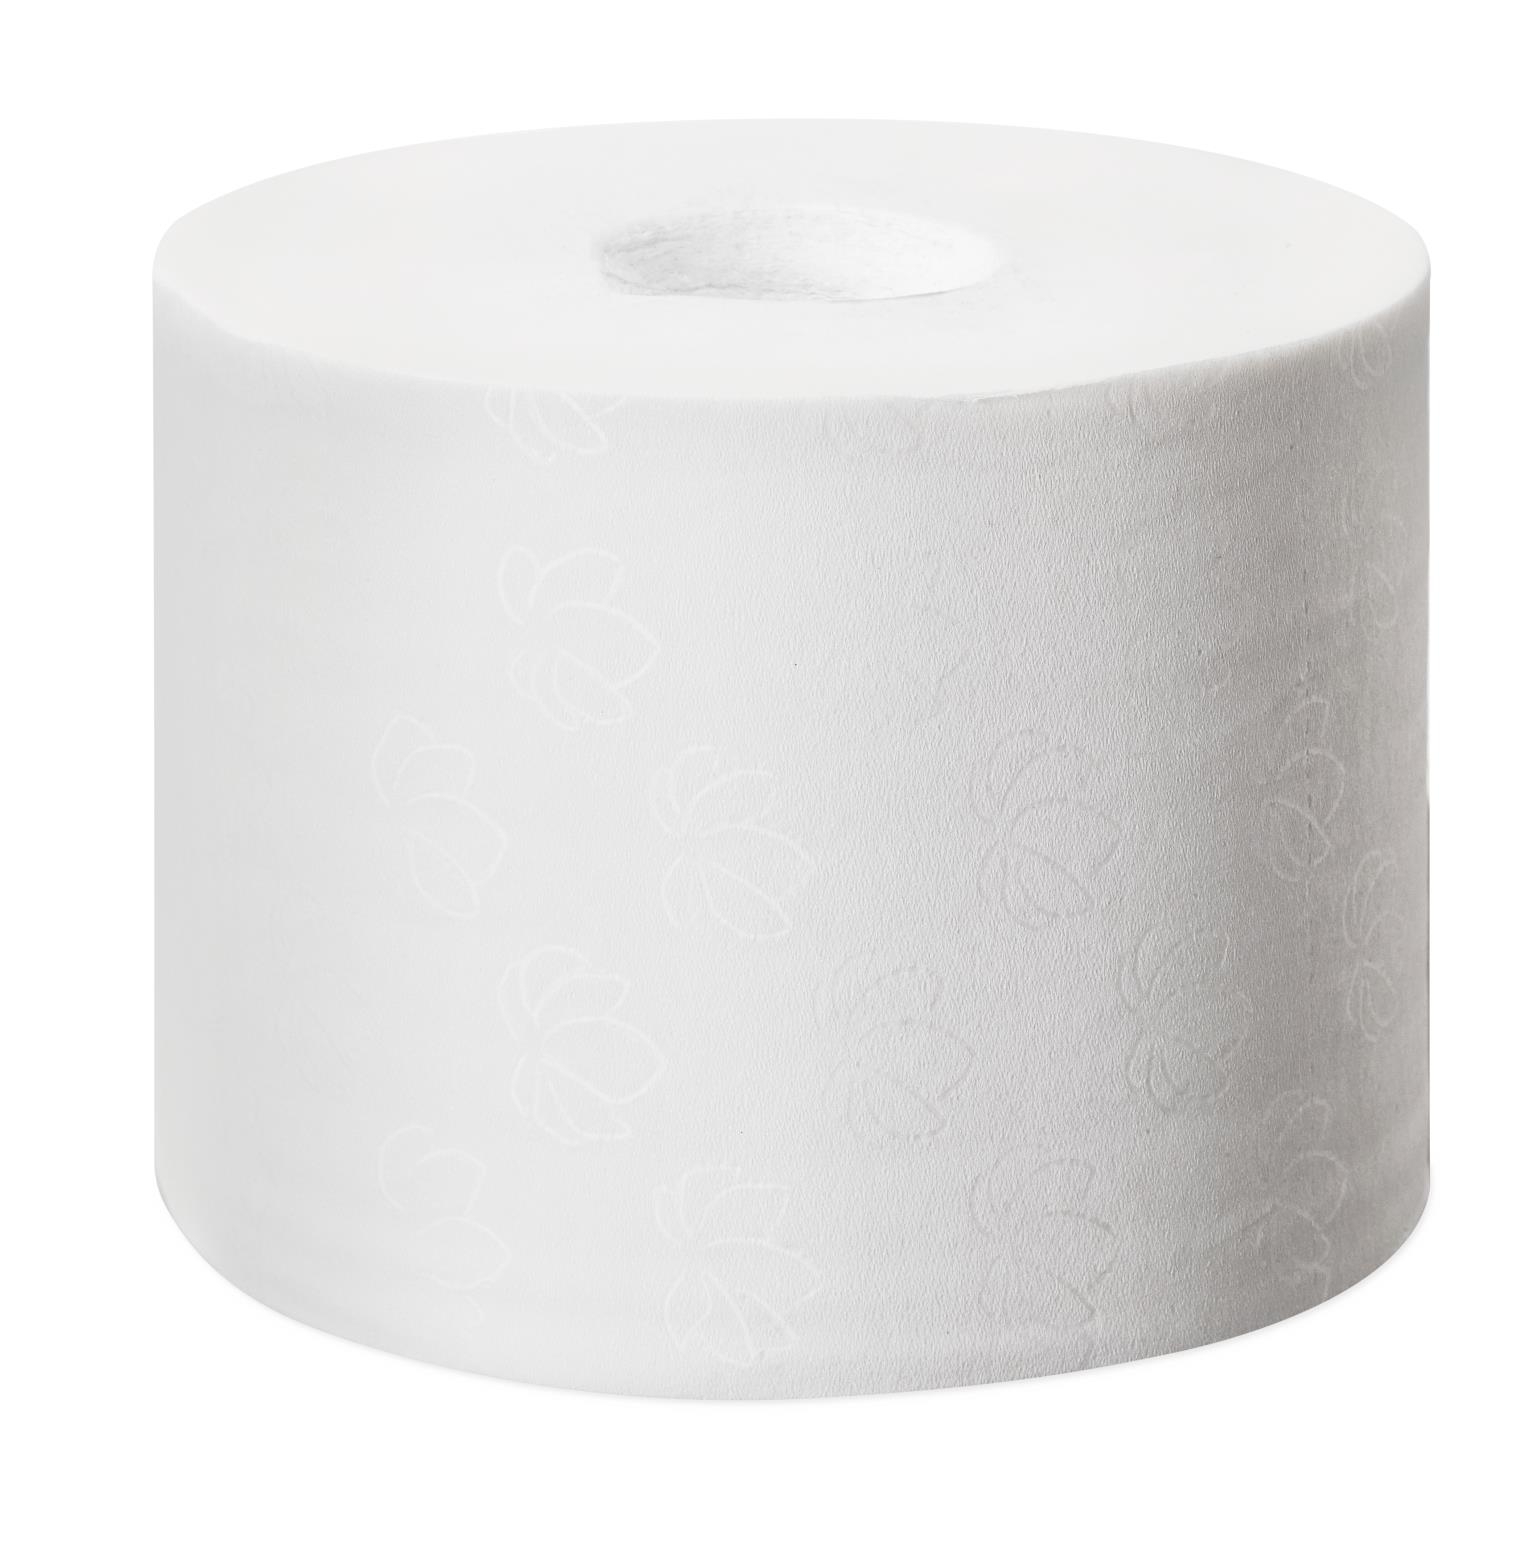 WC-PAPIER 2-LAGIG TORK  800 Blatt, 12.5 x 9.3 cm, Tissue, 100lfm